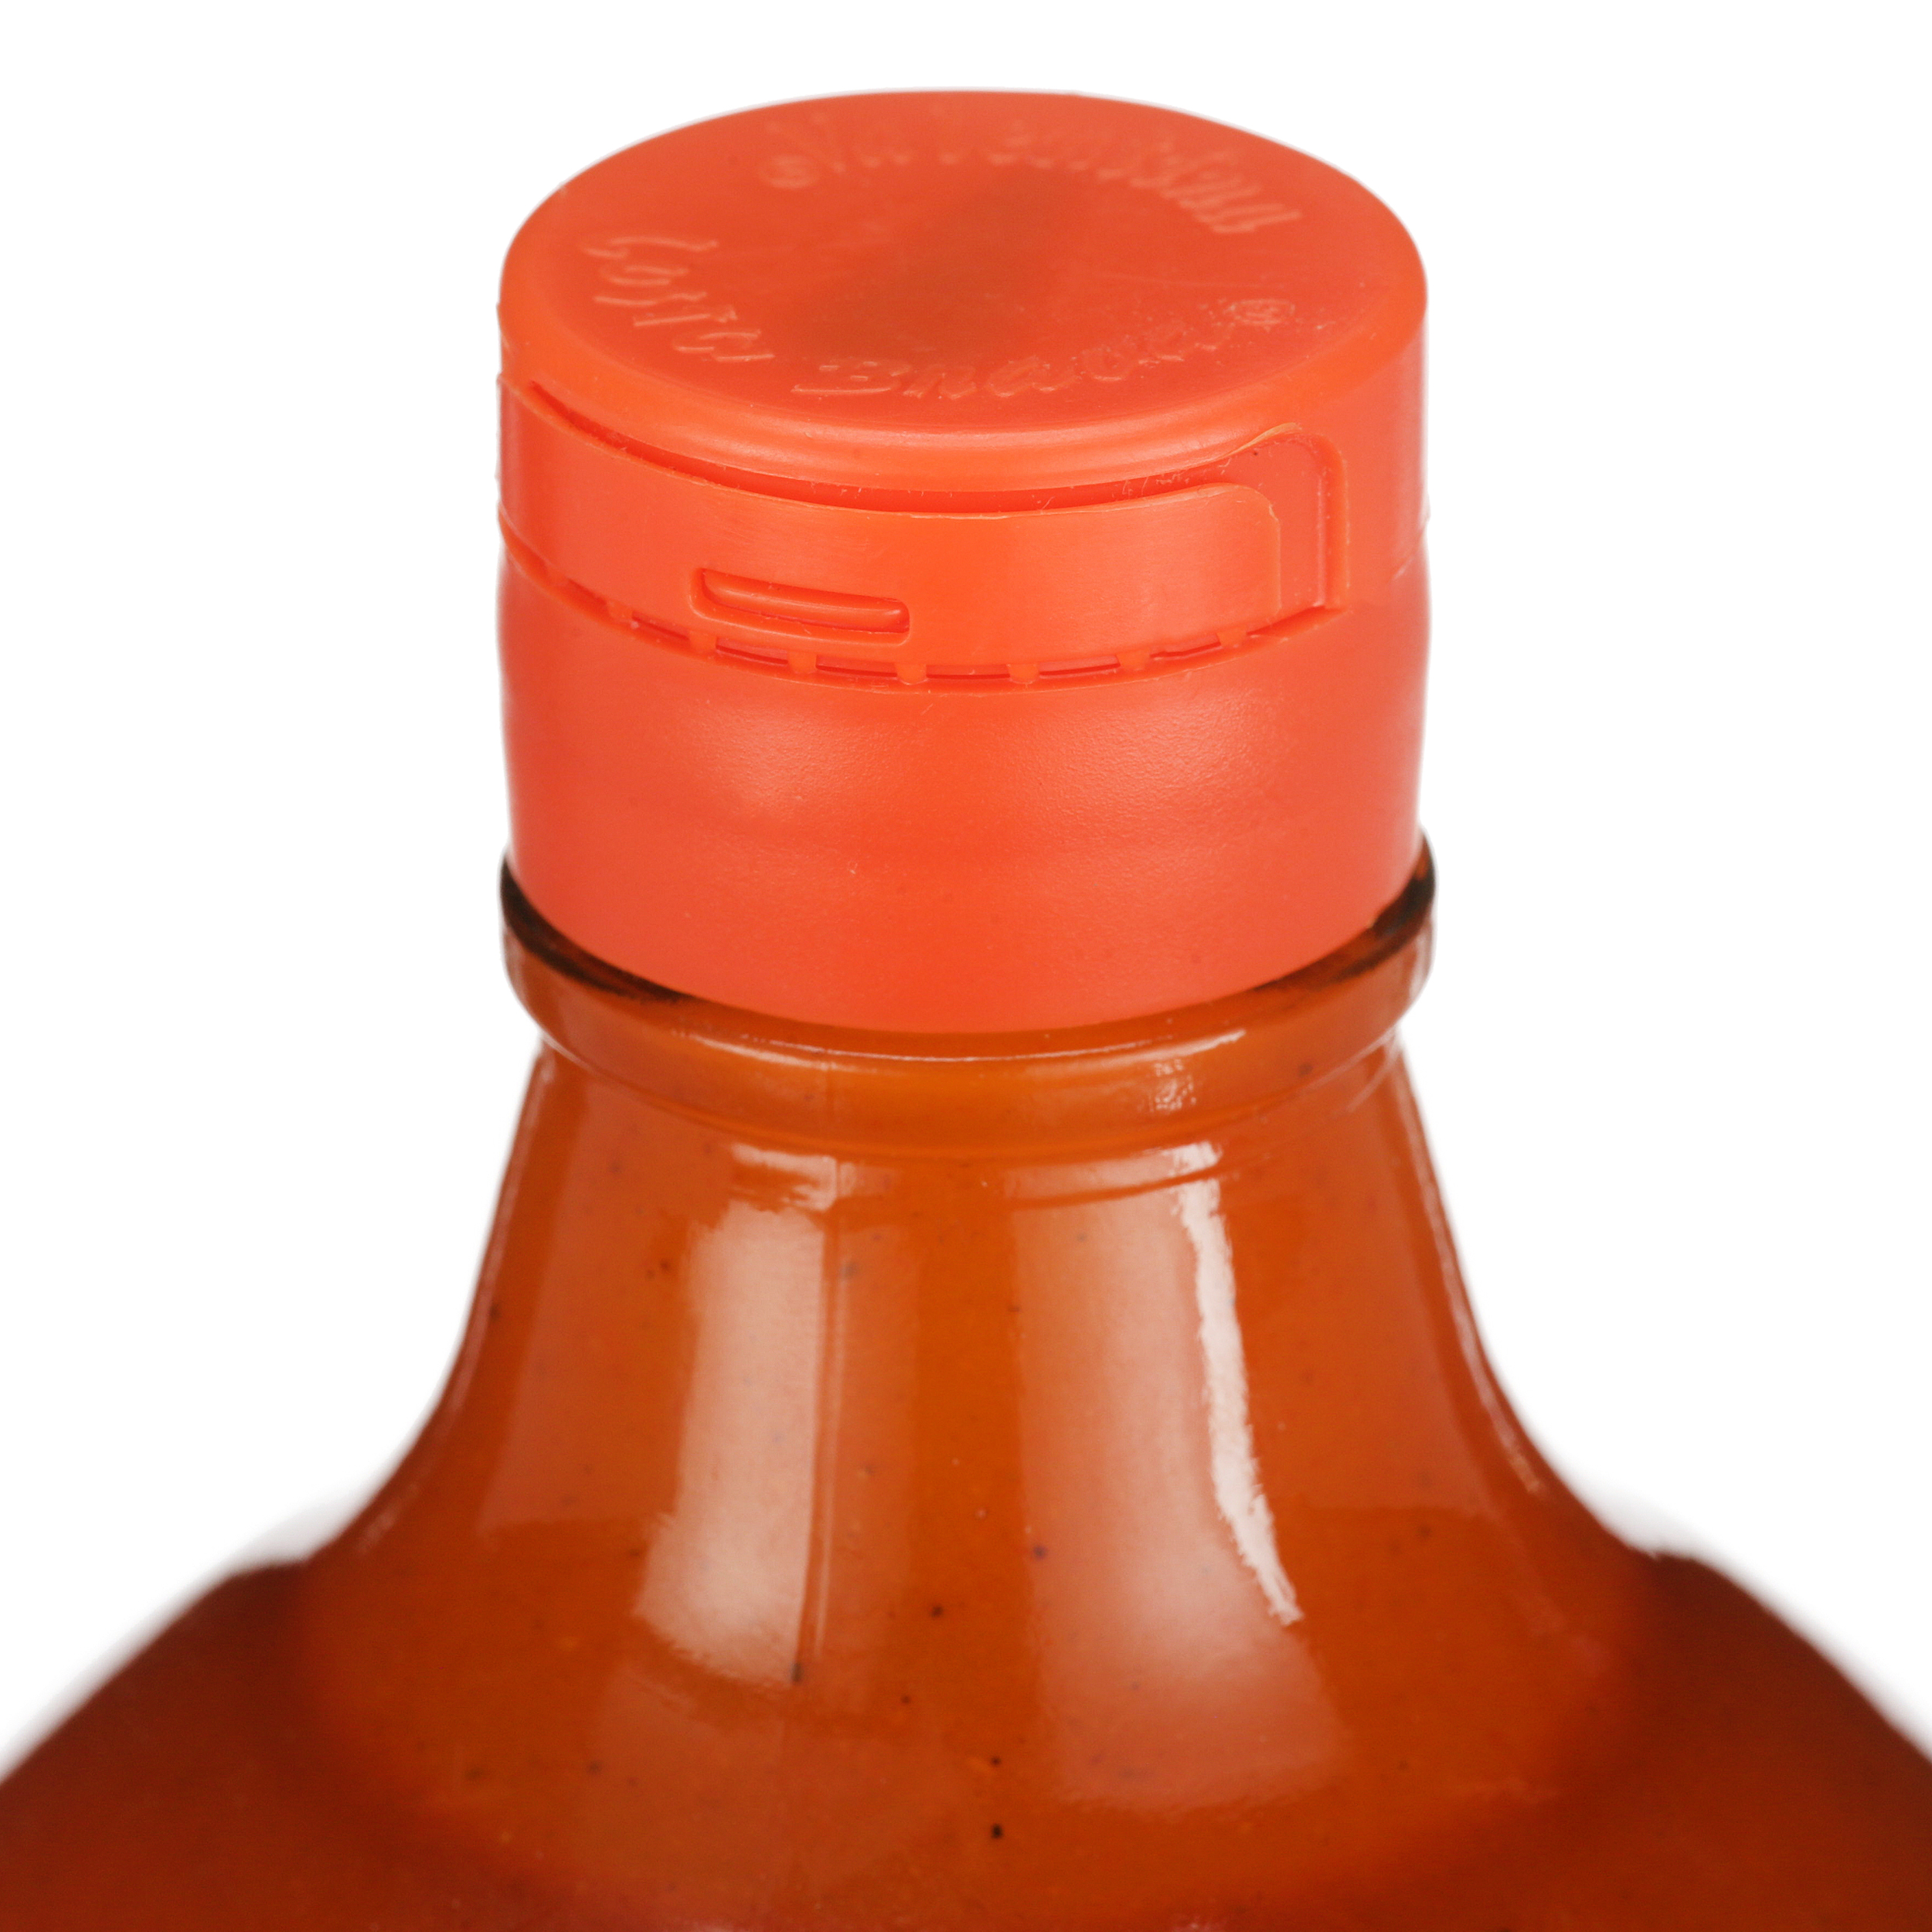 Valentina Mexican Hot Sauce, 34 fl oz - image 2 of 7